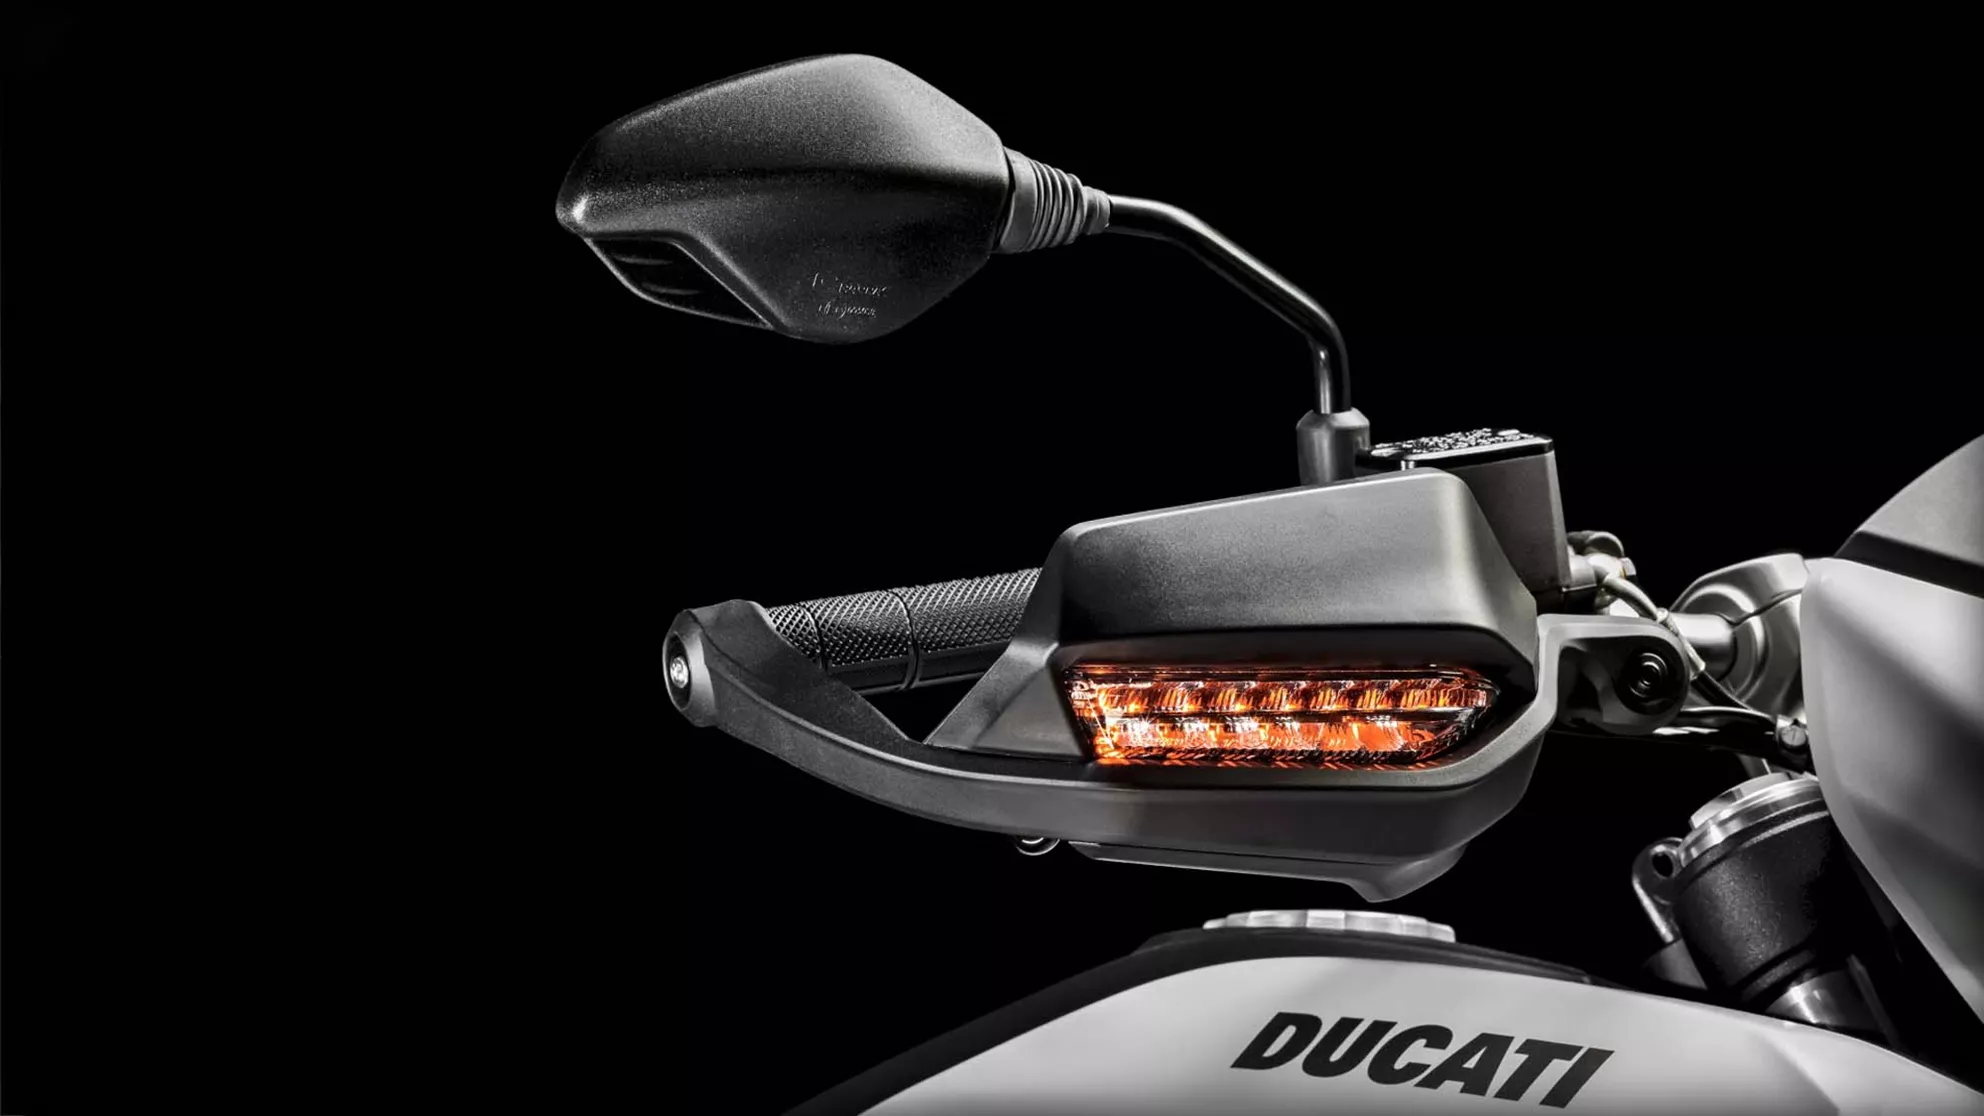 Ducati Hypermotard 939 - Image 7